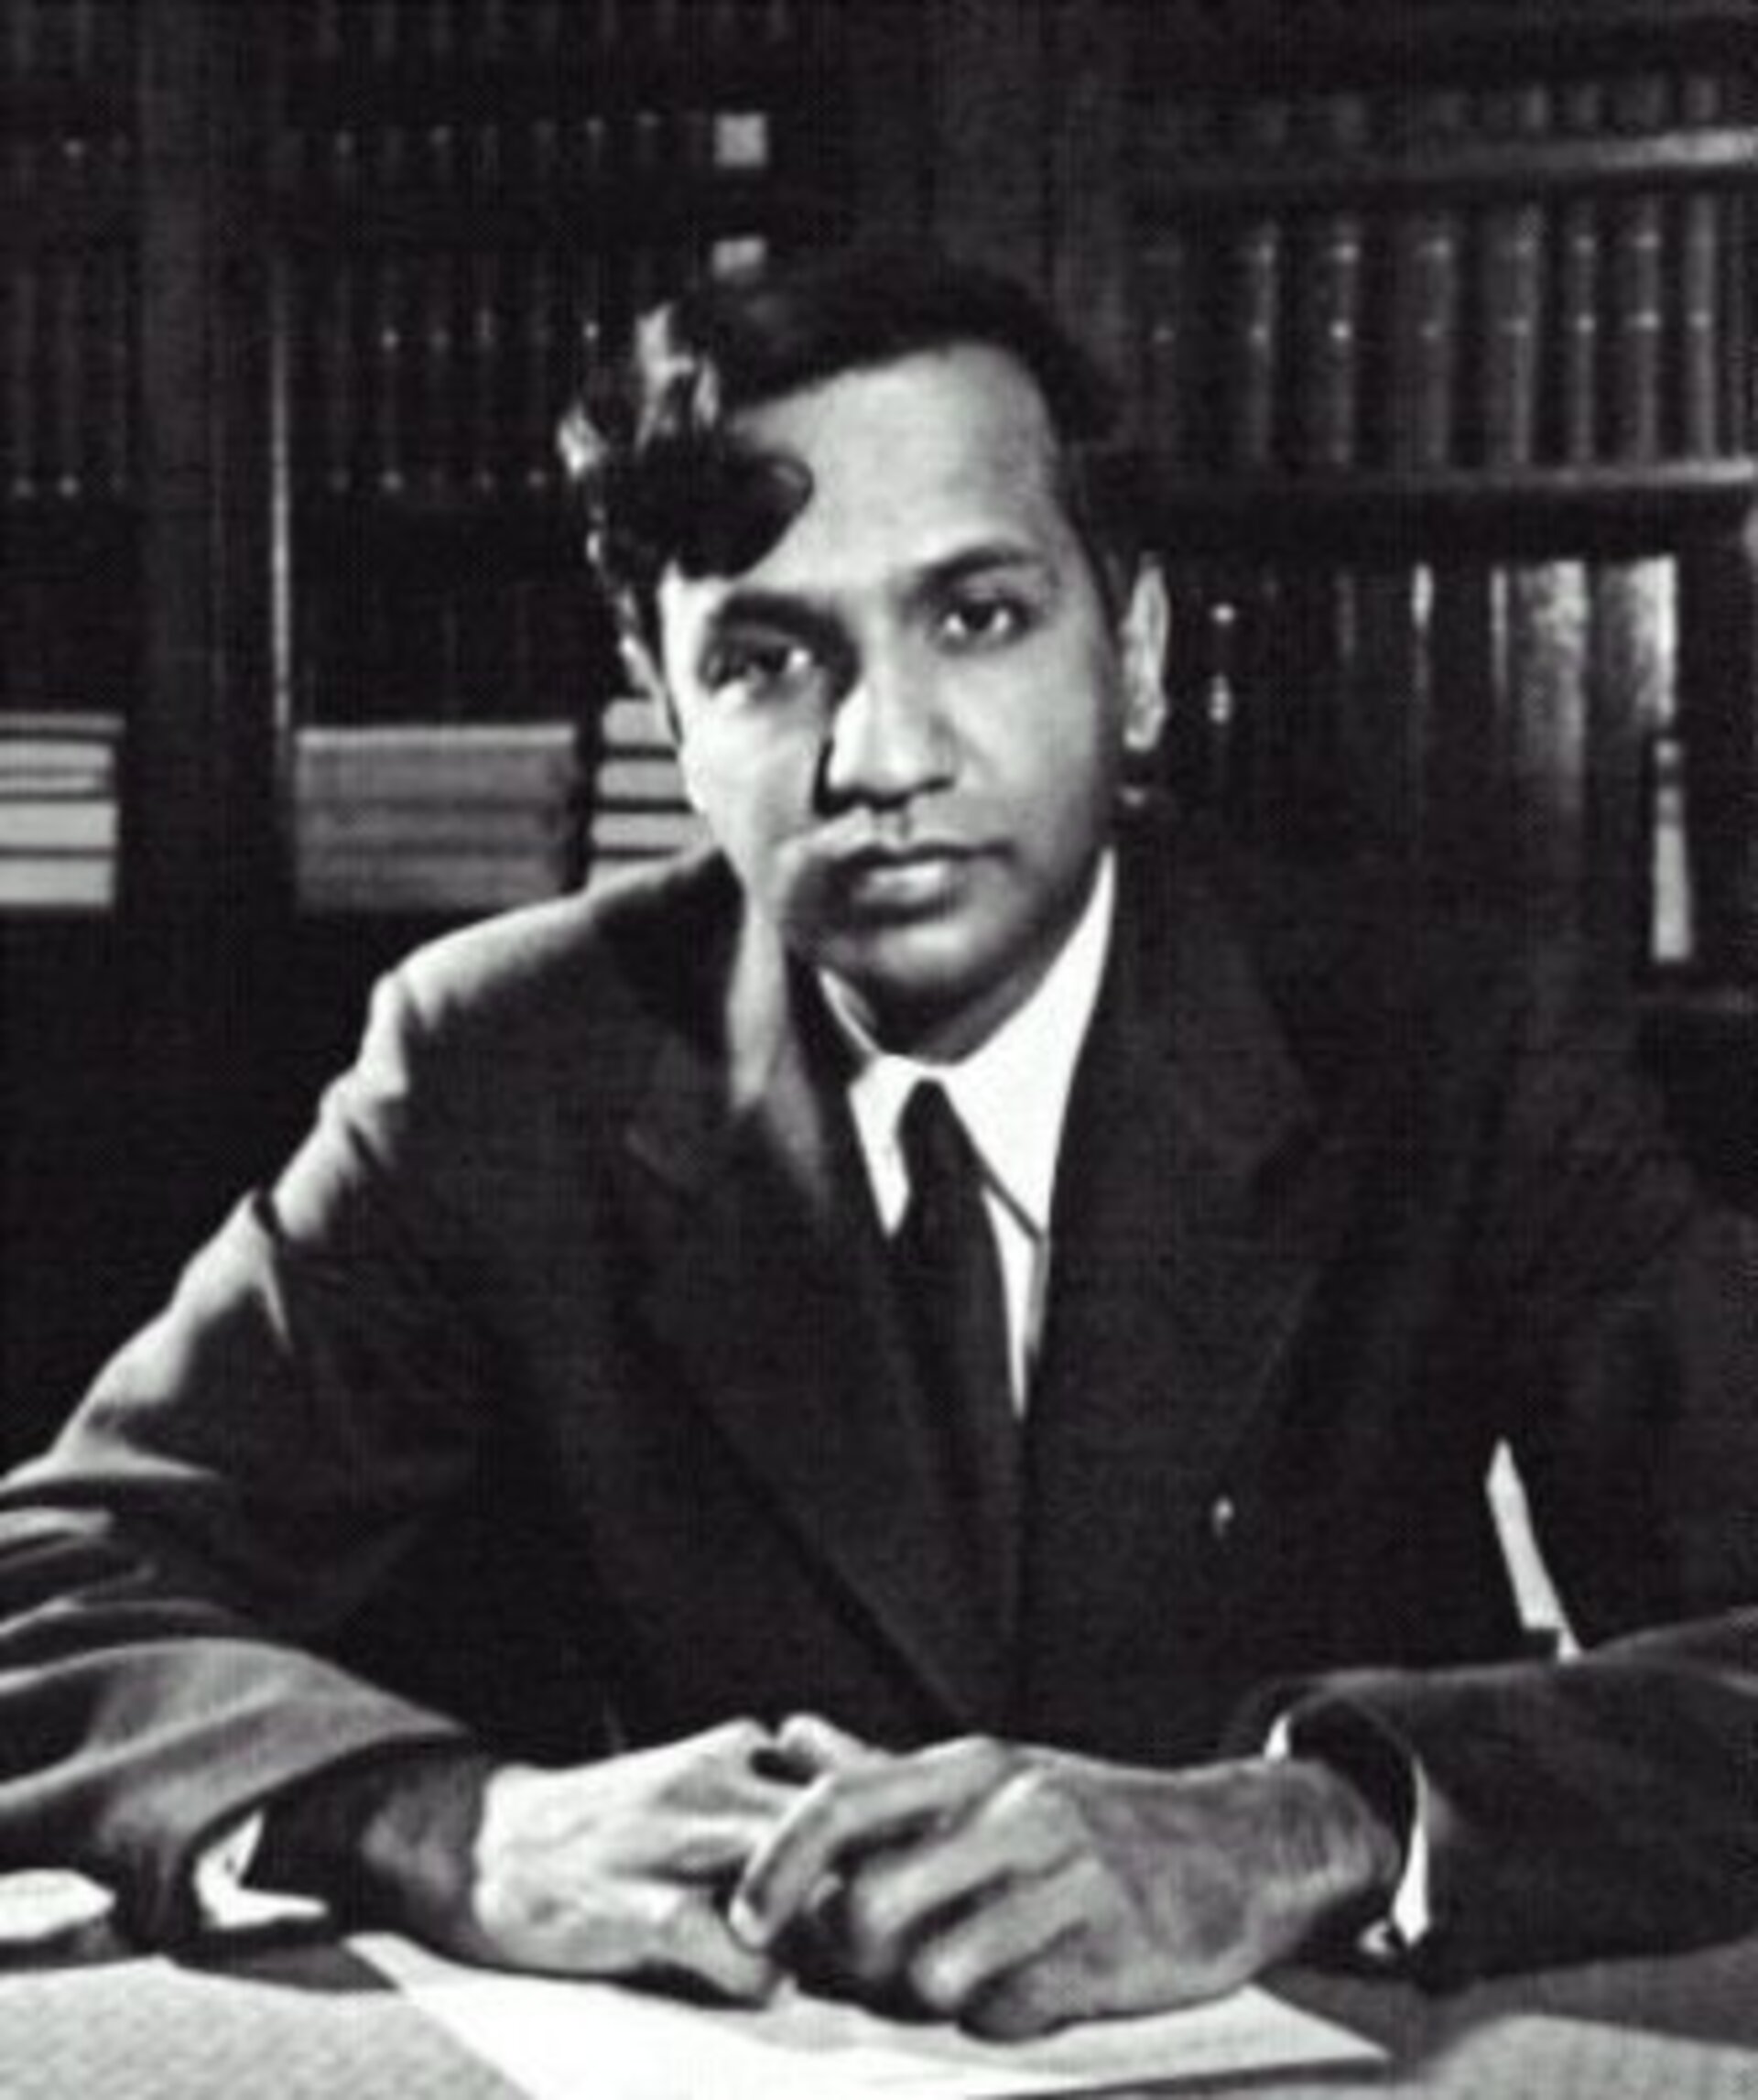 Subrahmanyan Chandrasekhar (1910-1995)